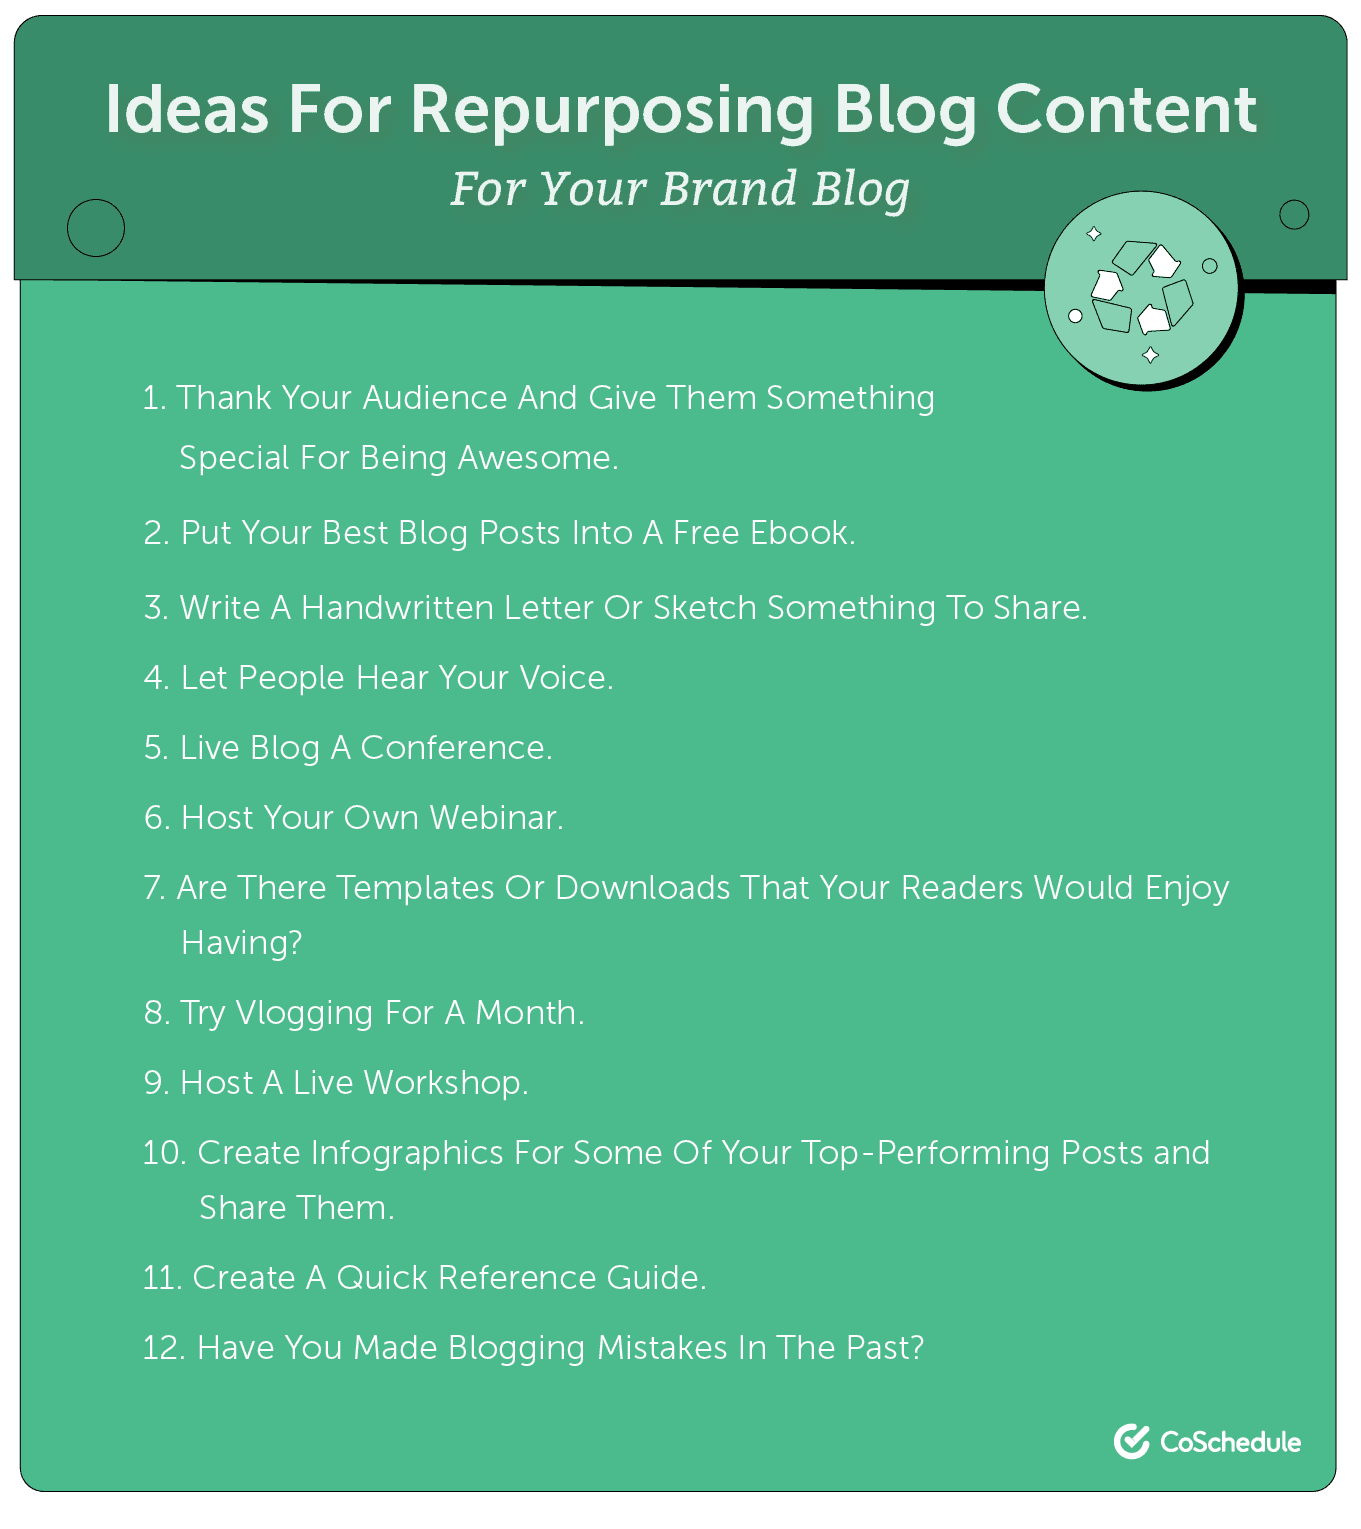 Ideas for repurposing your blog content.